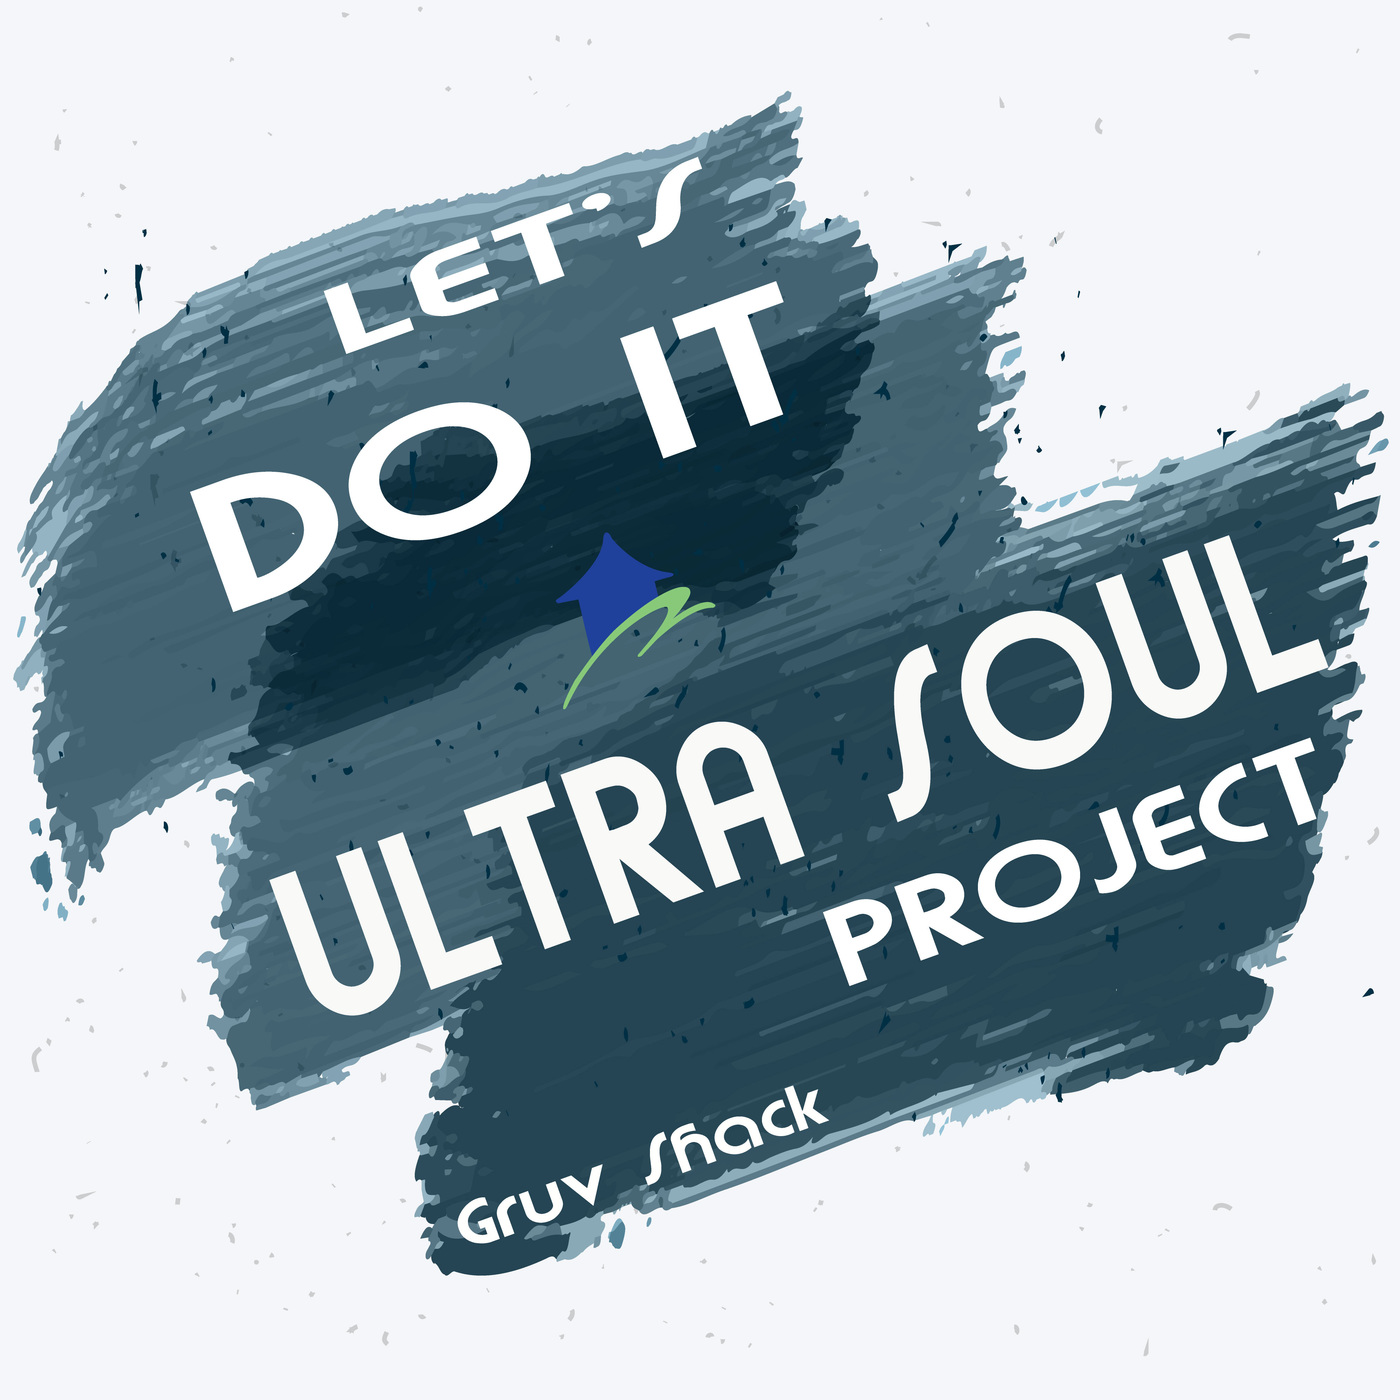 Ultra Soul Project - Let's Do It / Gruv Shack Digital